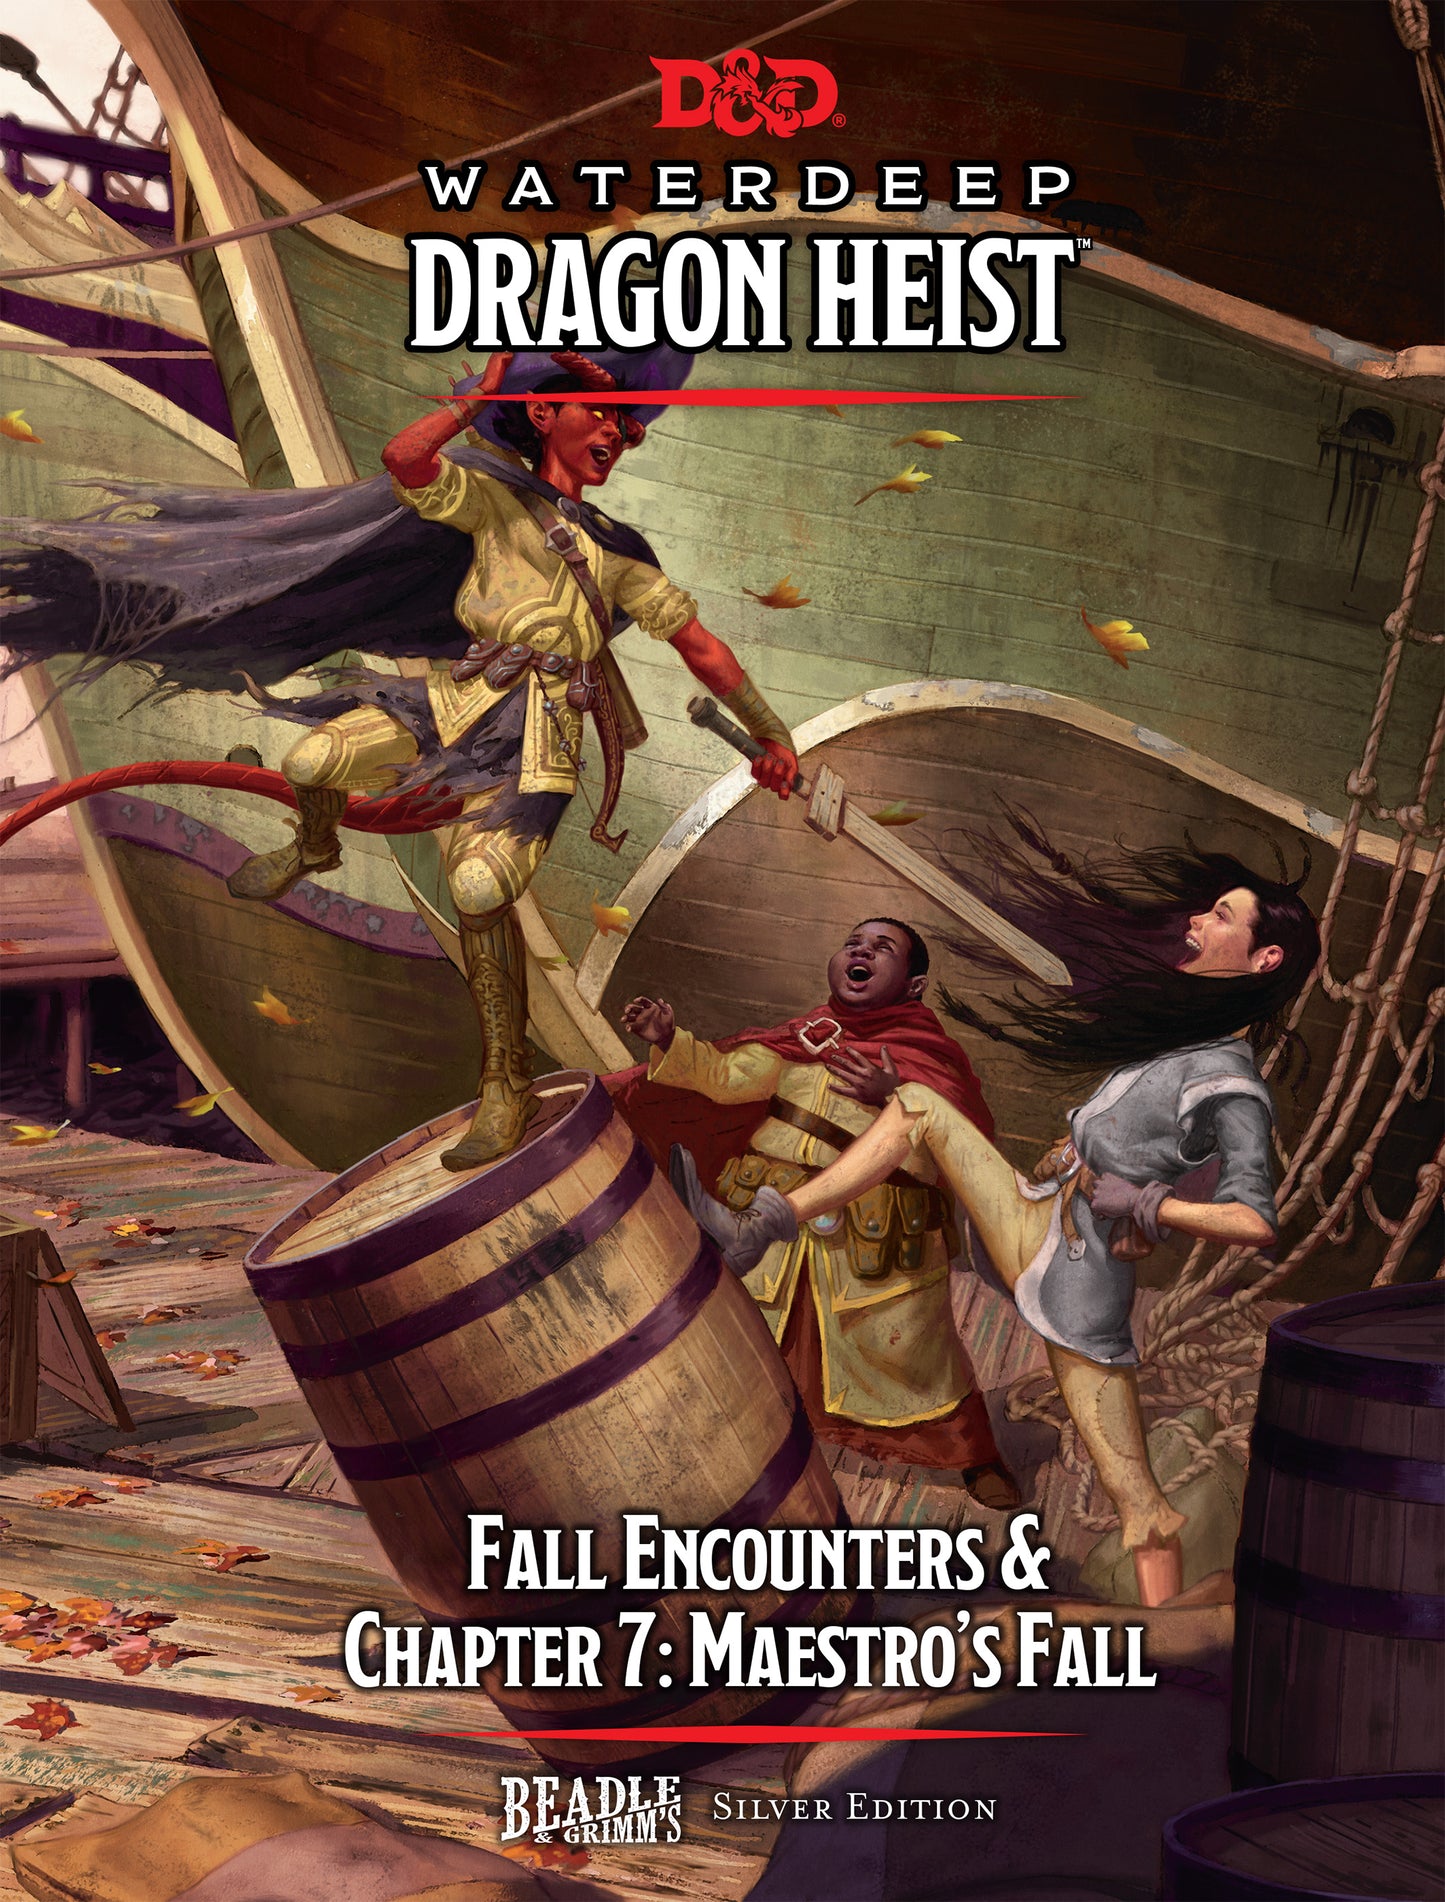 Fall Encounters & Chapter 7 of Waterdeep: Dragon Heist